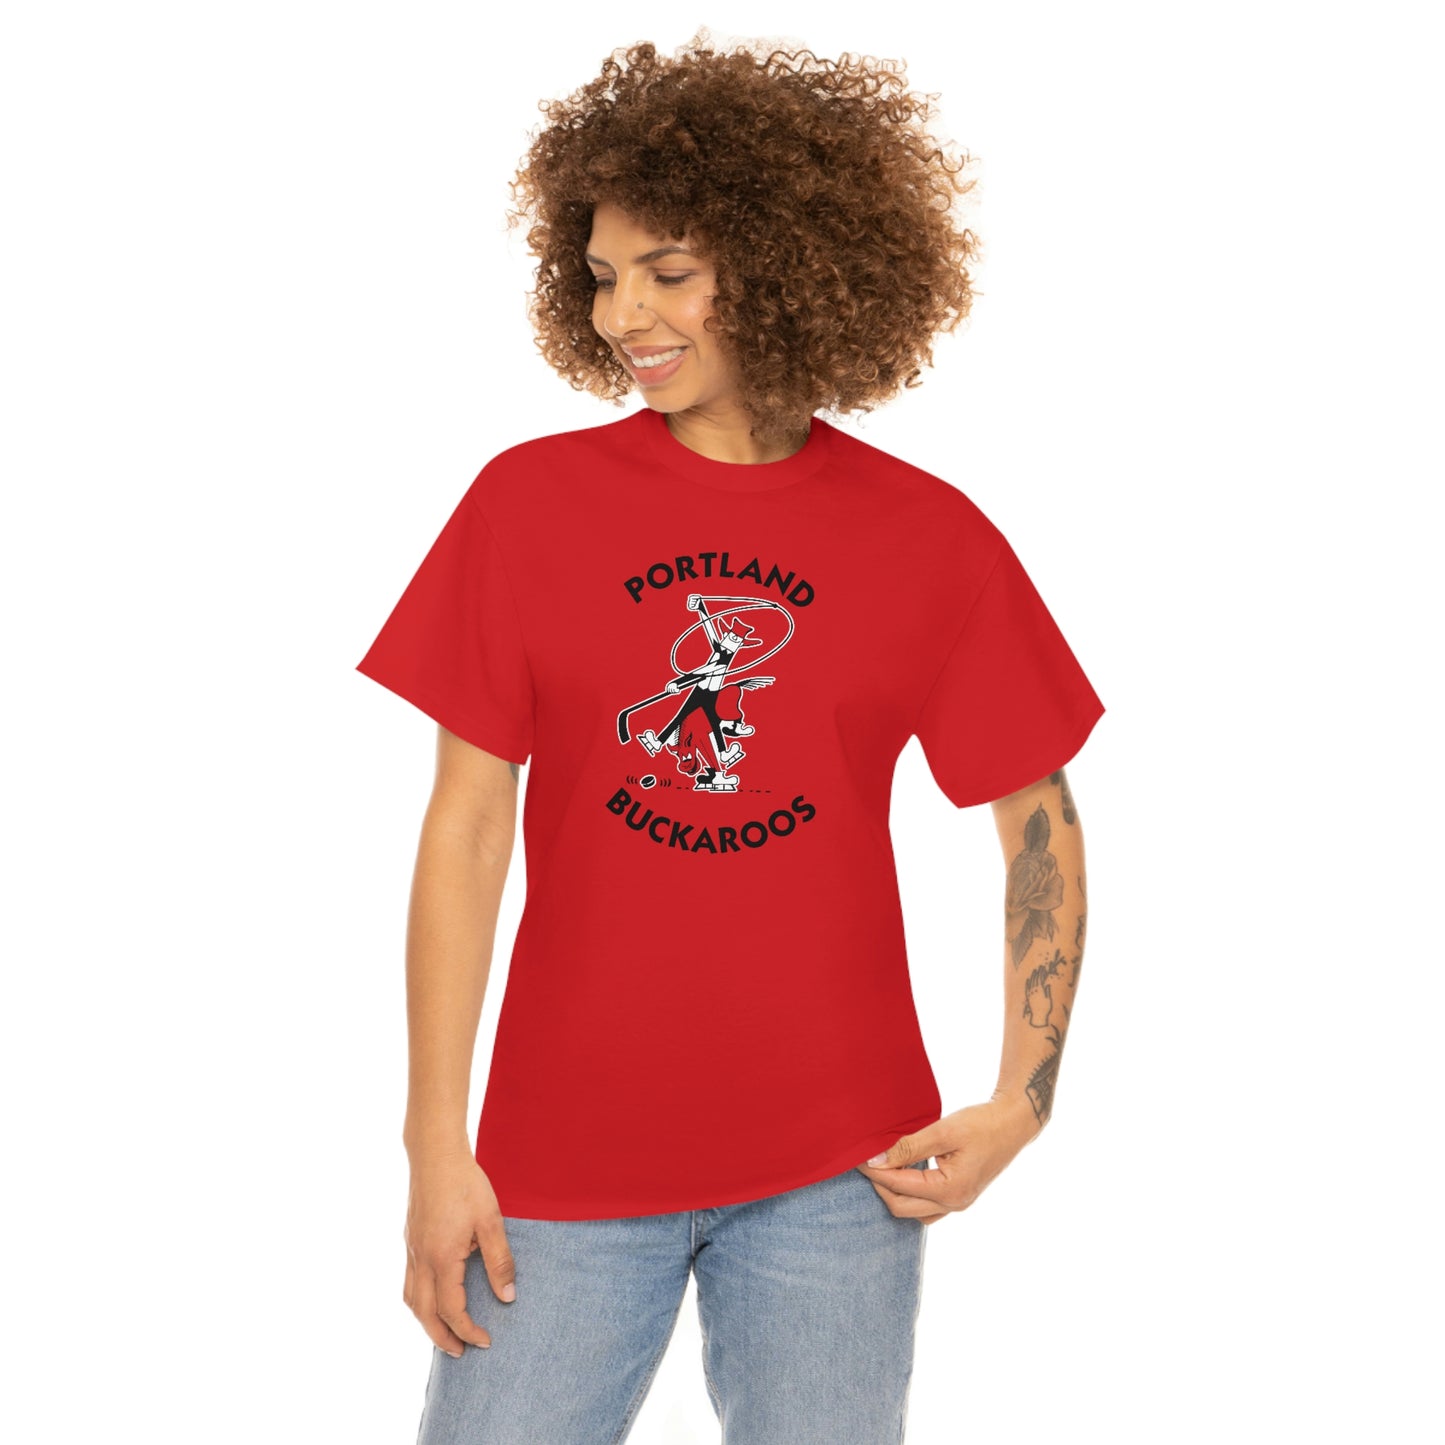 Portland Buckaros T-Shirt